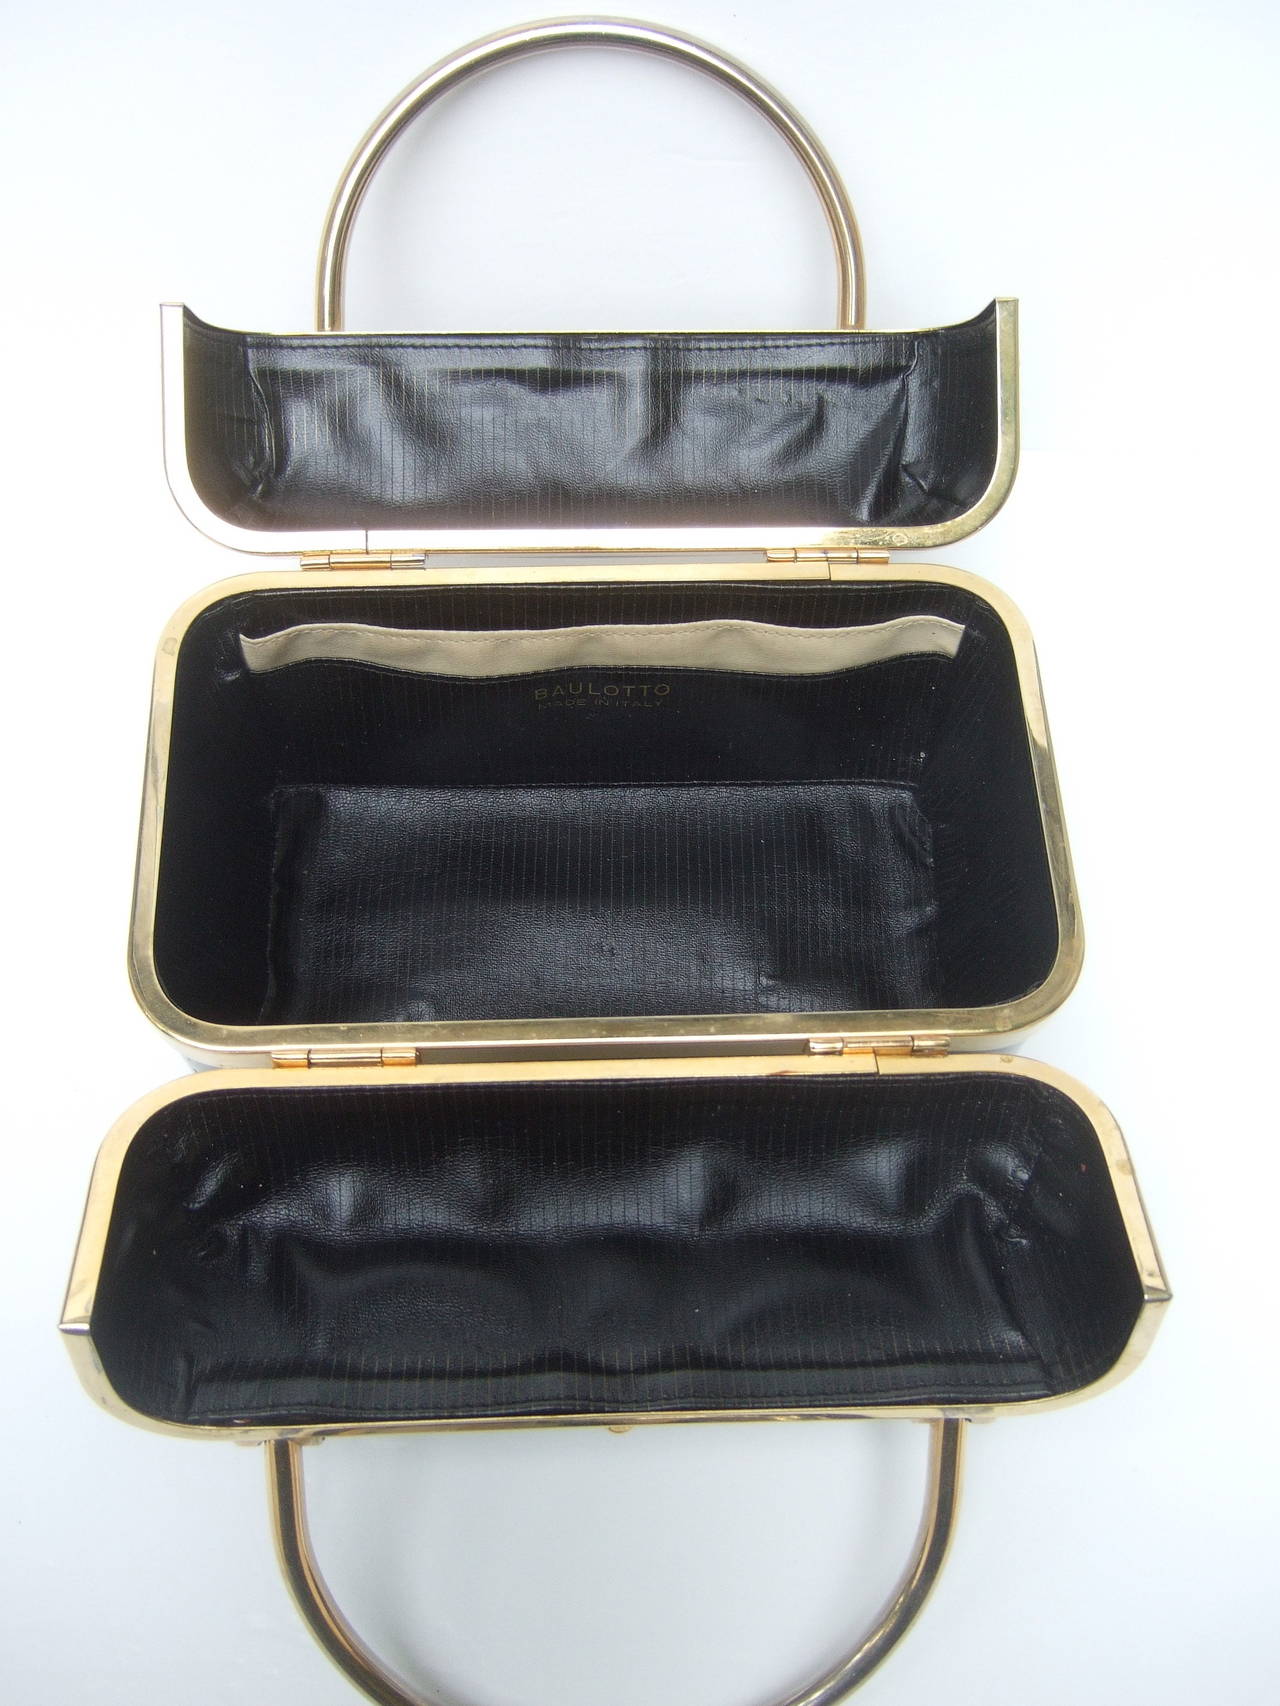 Sleek 1970s Italian Ebony Lucite Handbag Designed by Baulotto 1